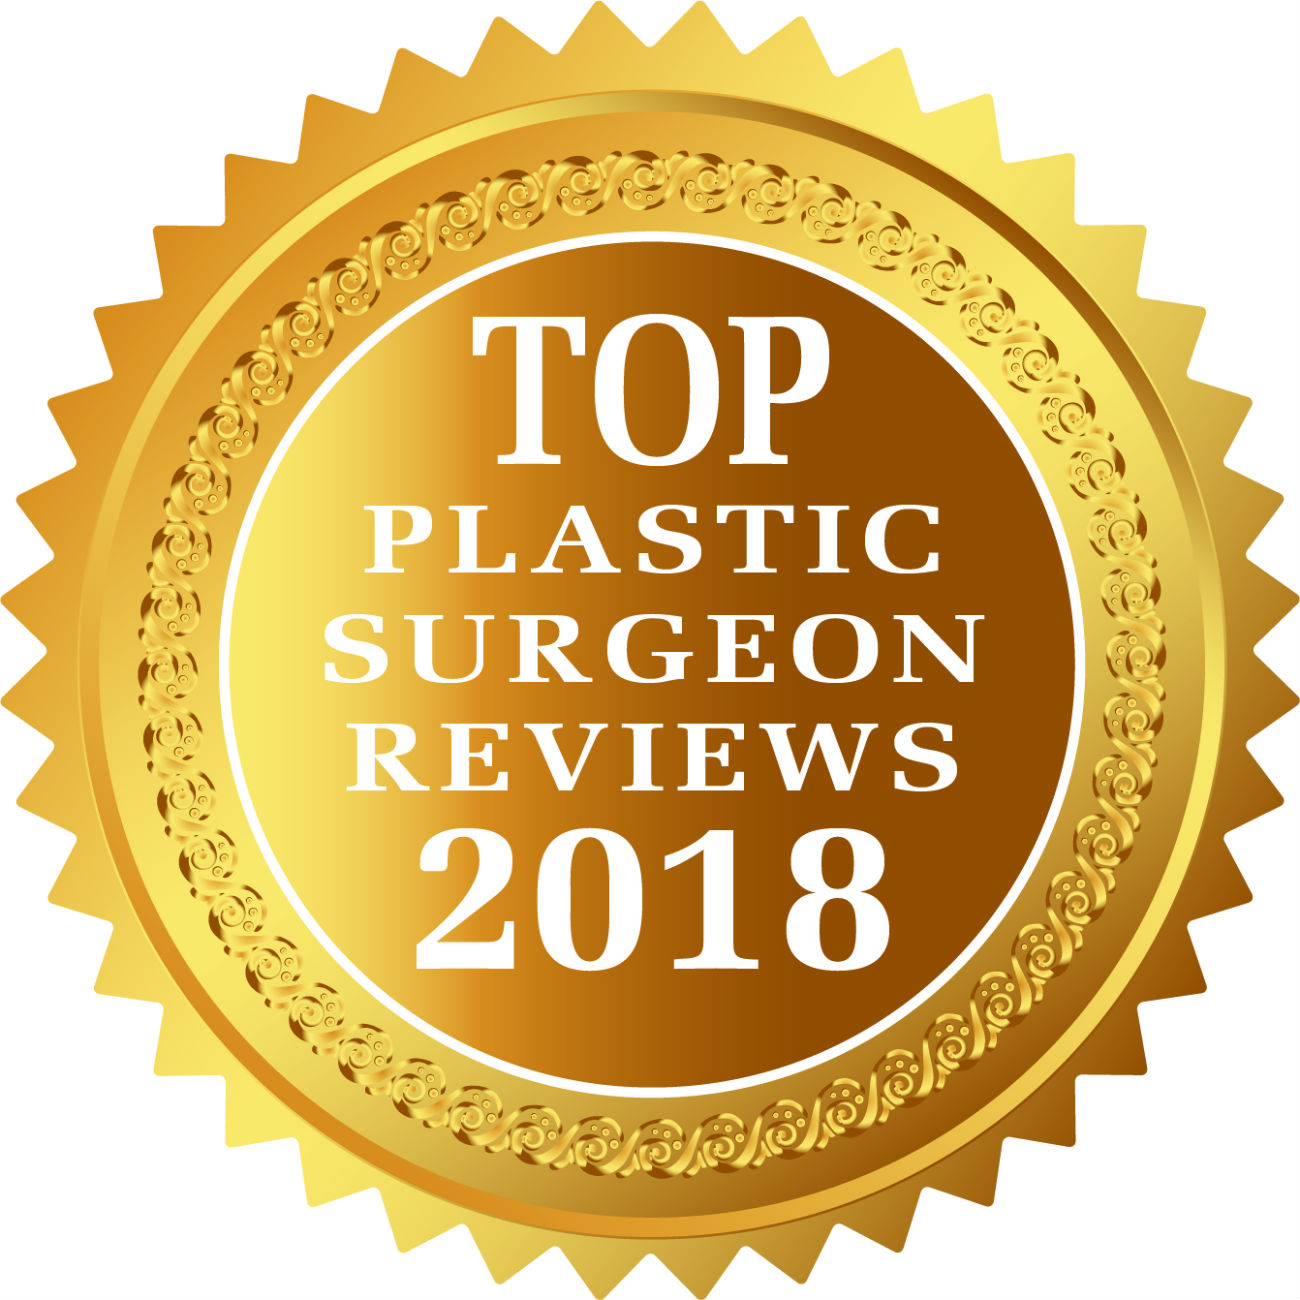 Top Plastic Surgeon Reviews 2018